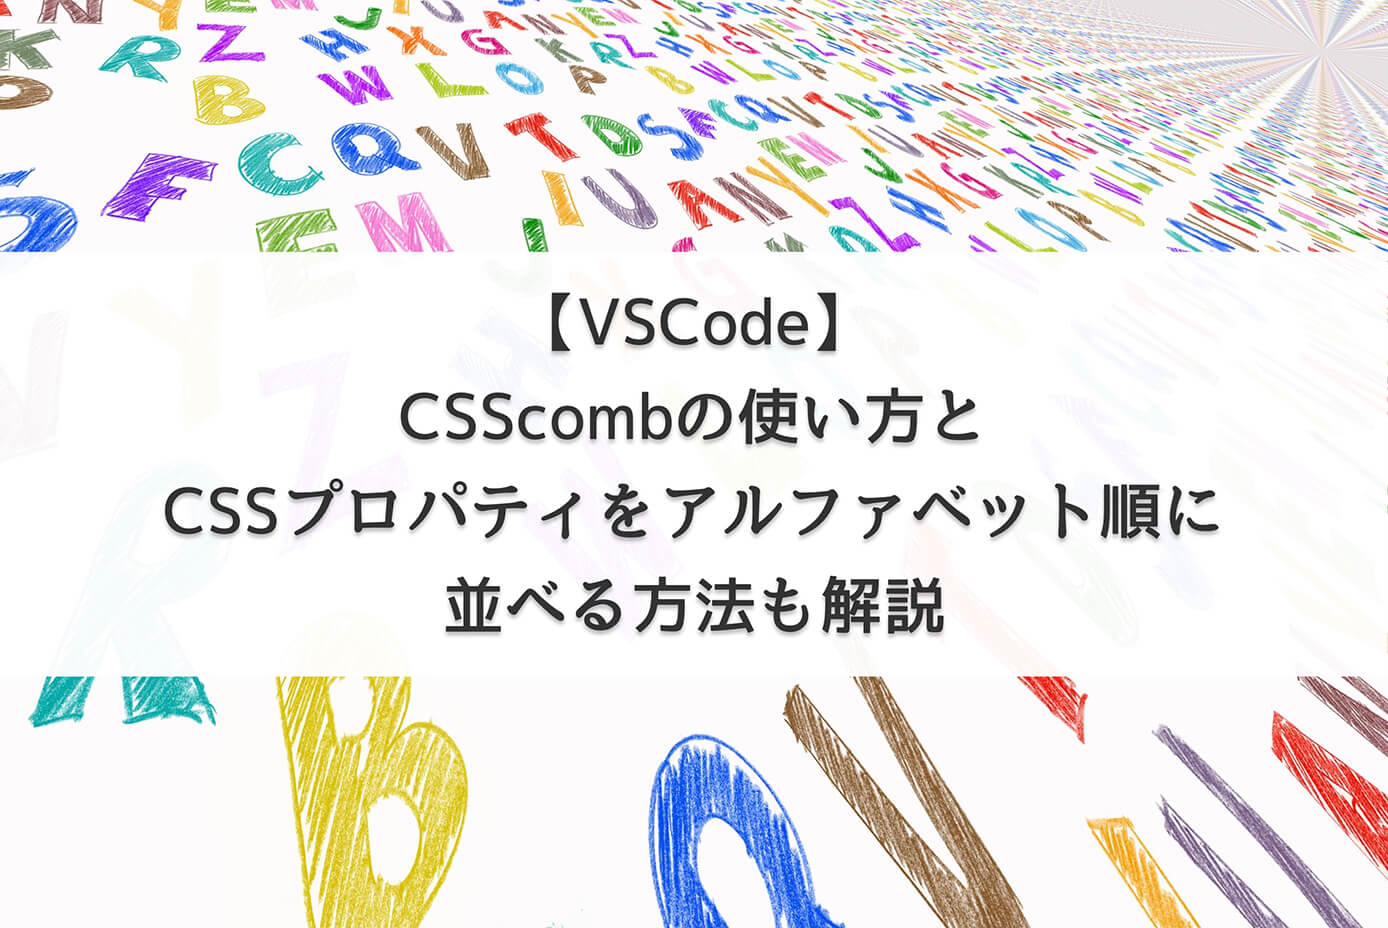 【VSCode】CSScombの使い方とCSSプロパティをアルファベット順に並べる方法も解説